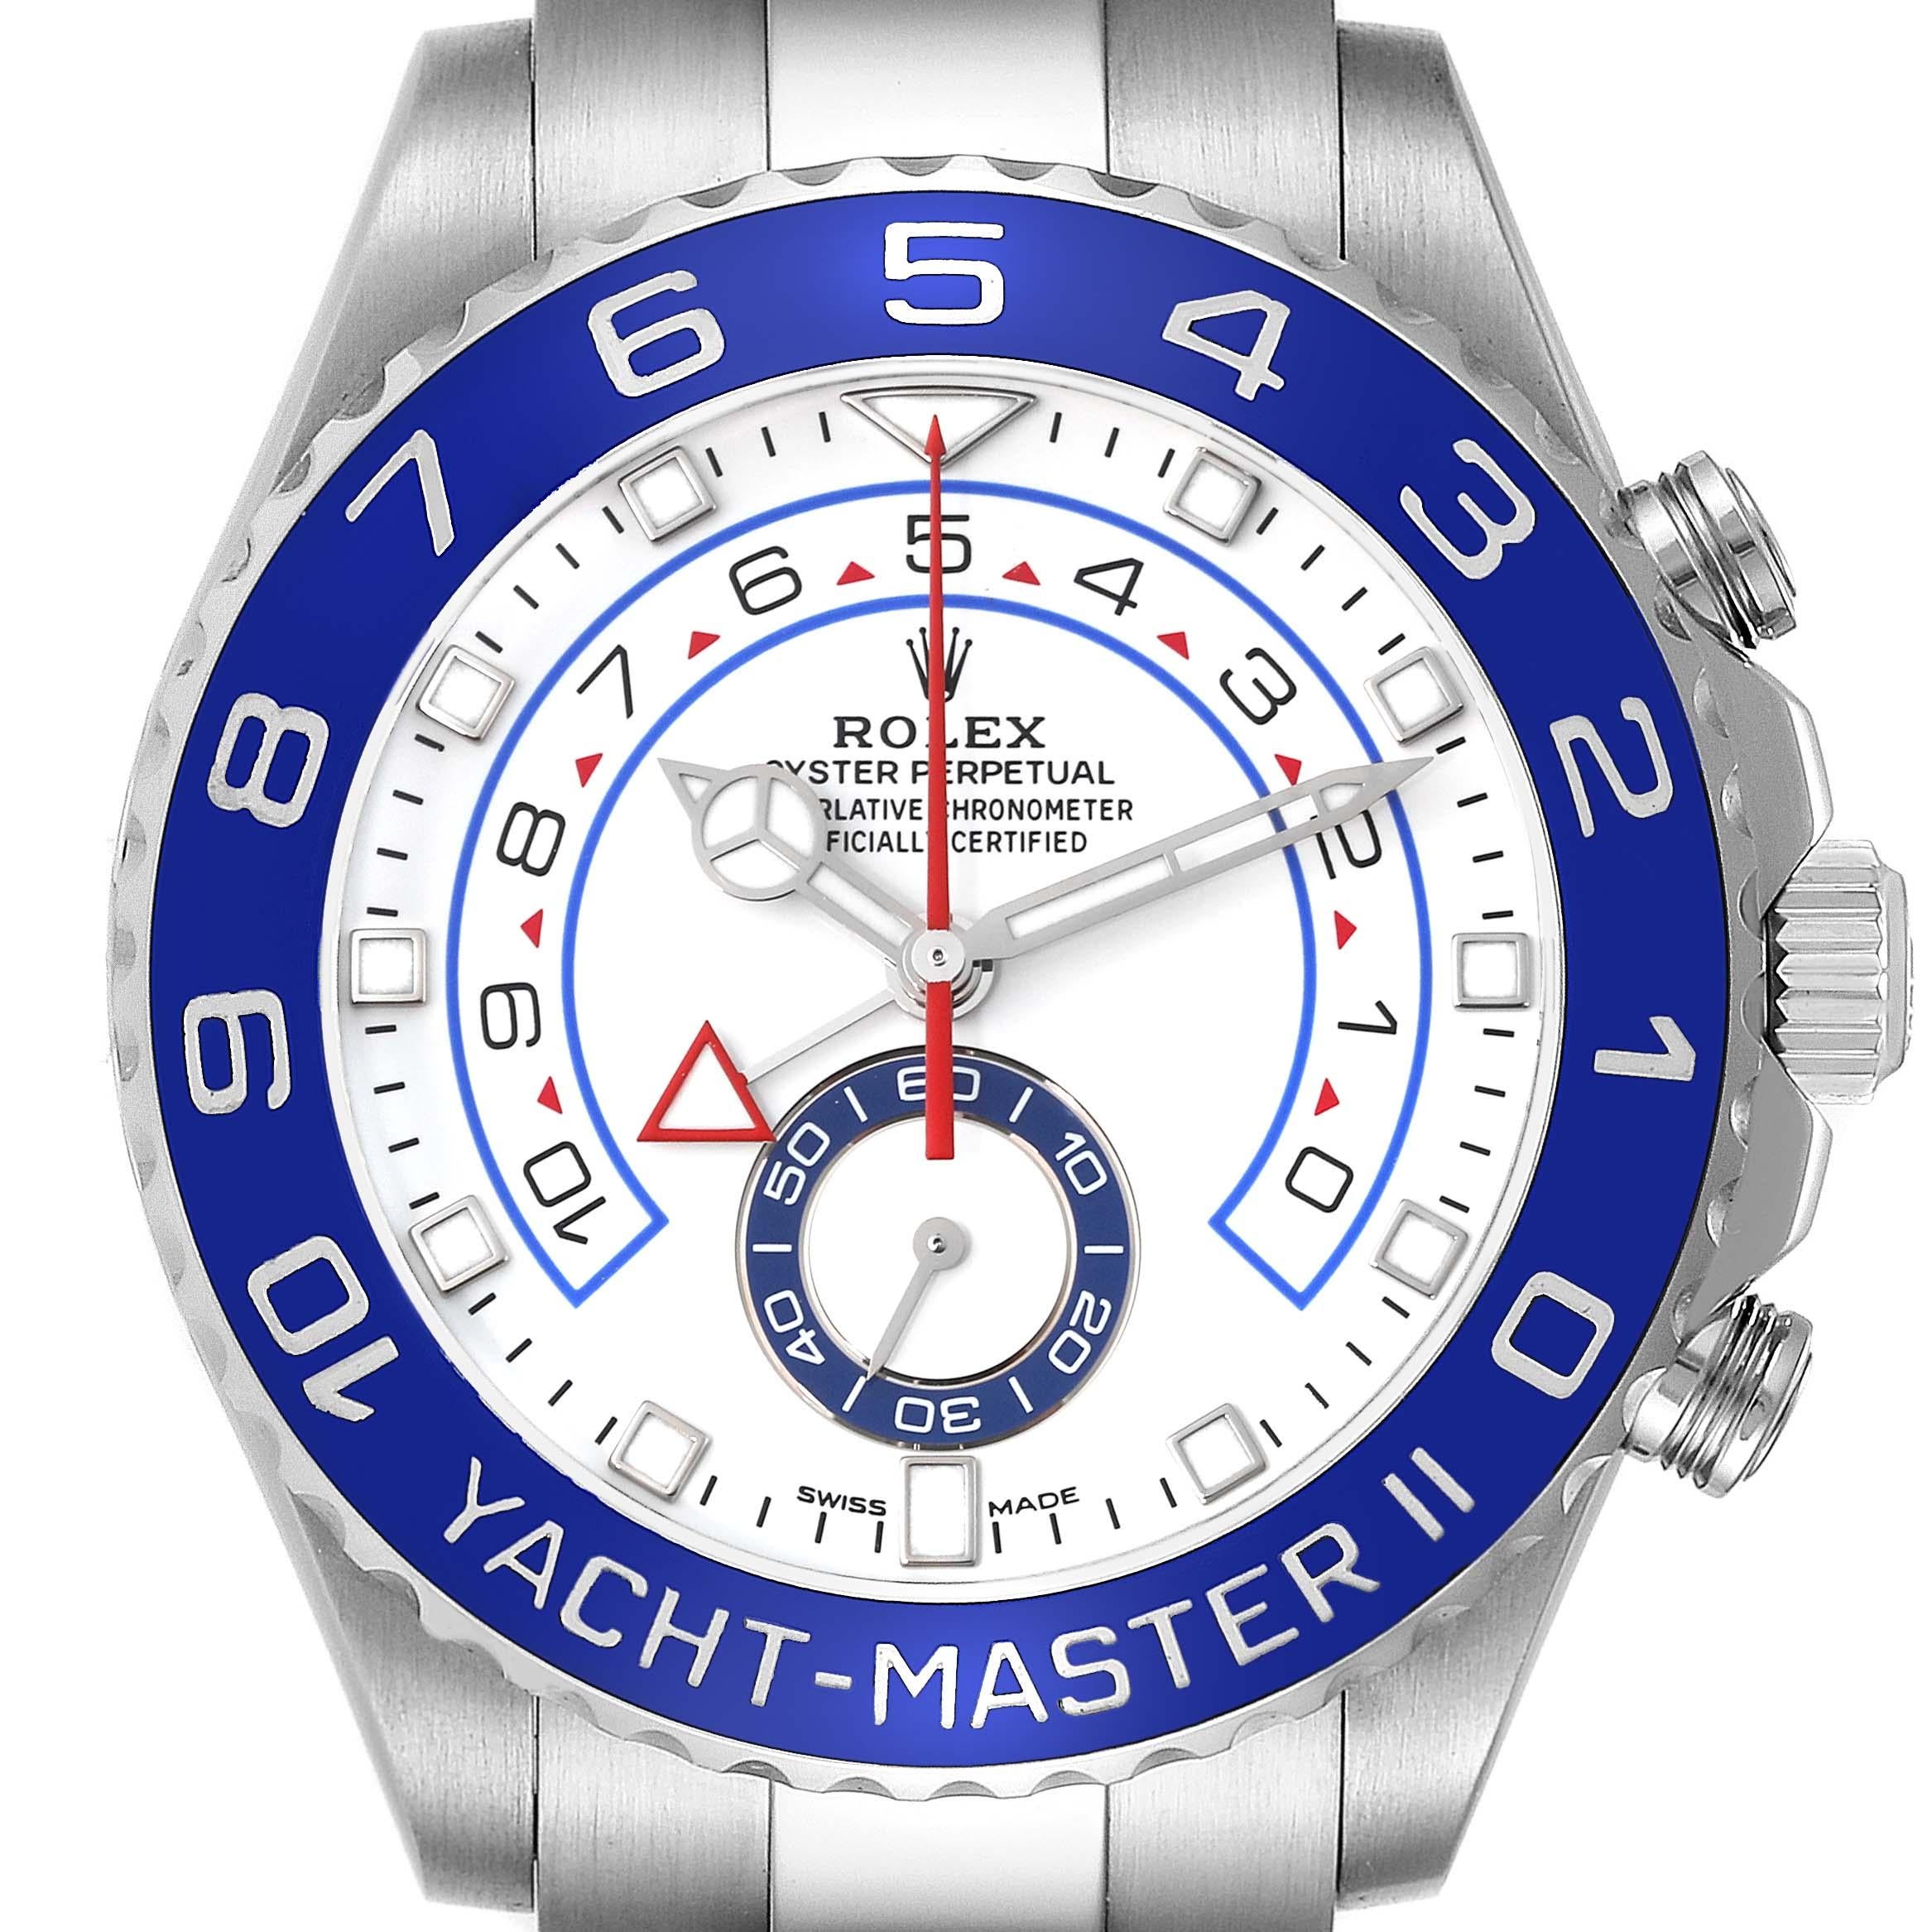 Rolex Yachtmaster II 44 Blue Cerachrom Bezel Steel Mens Watch 116680 Box Card